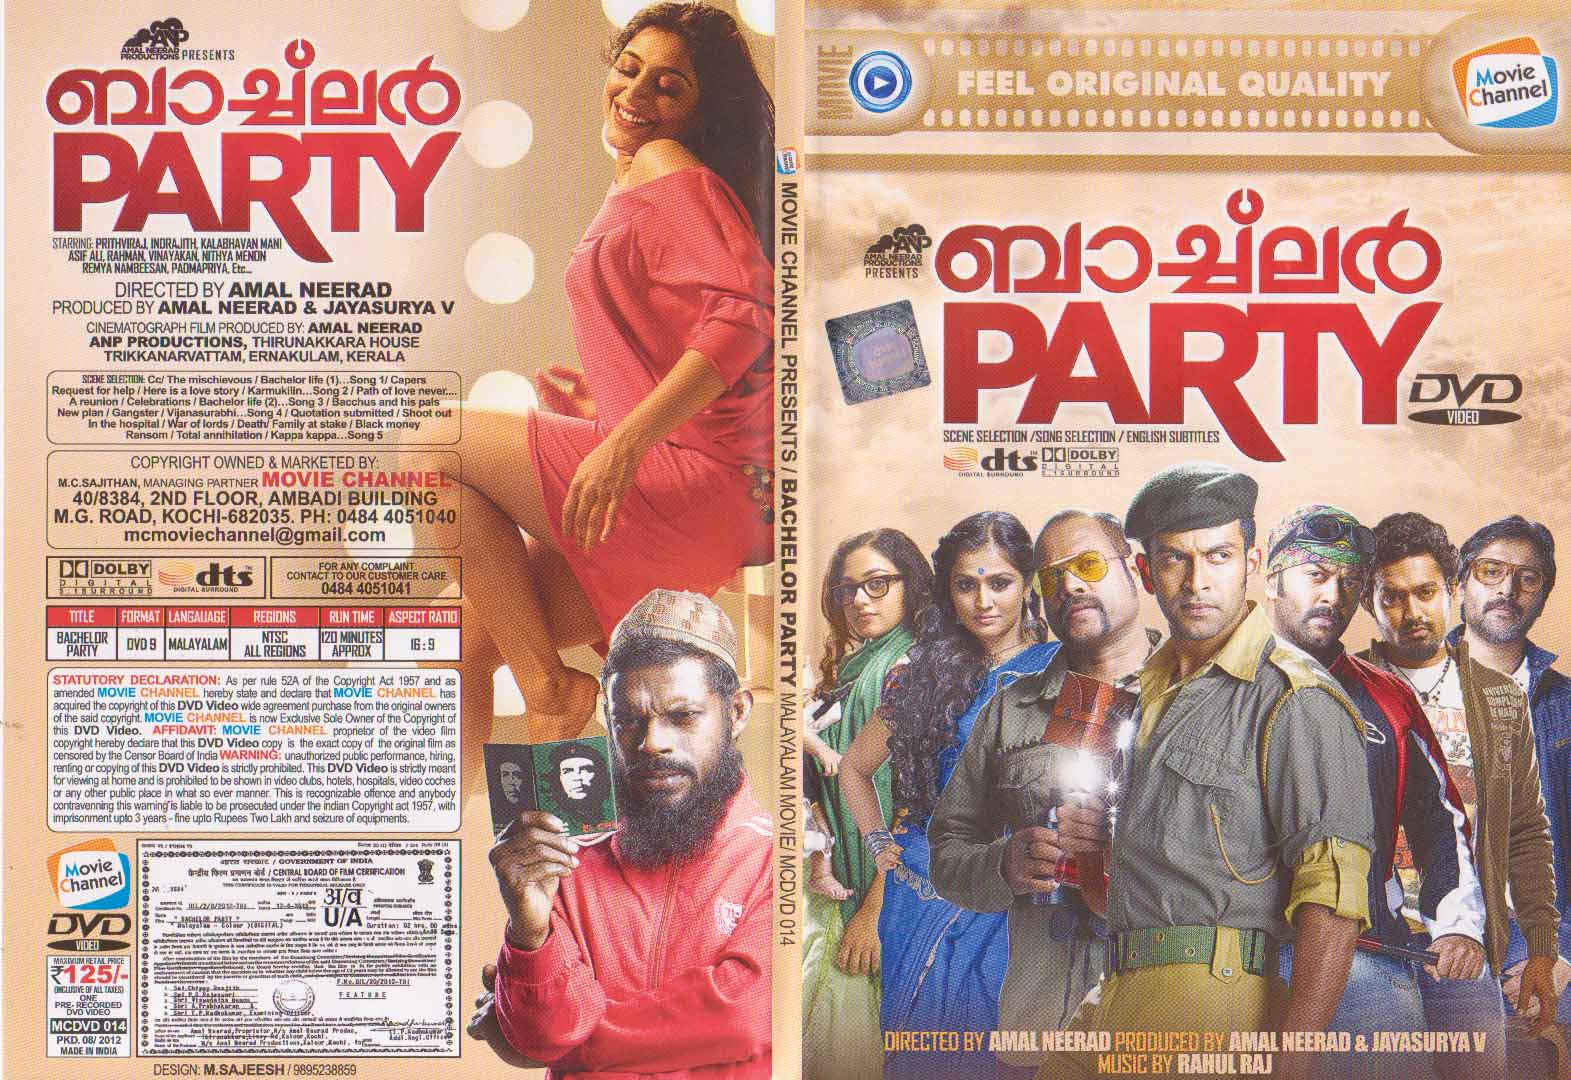 Bachelor Party part 2 movie torrent 720p